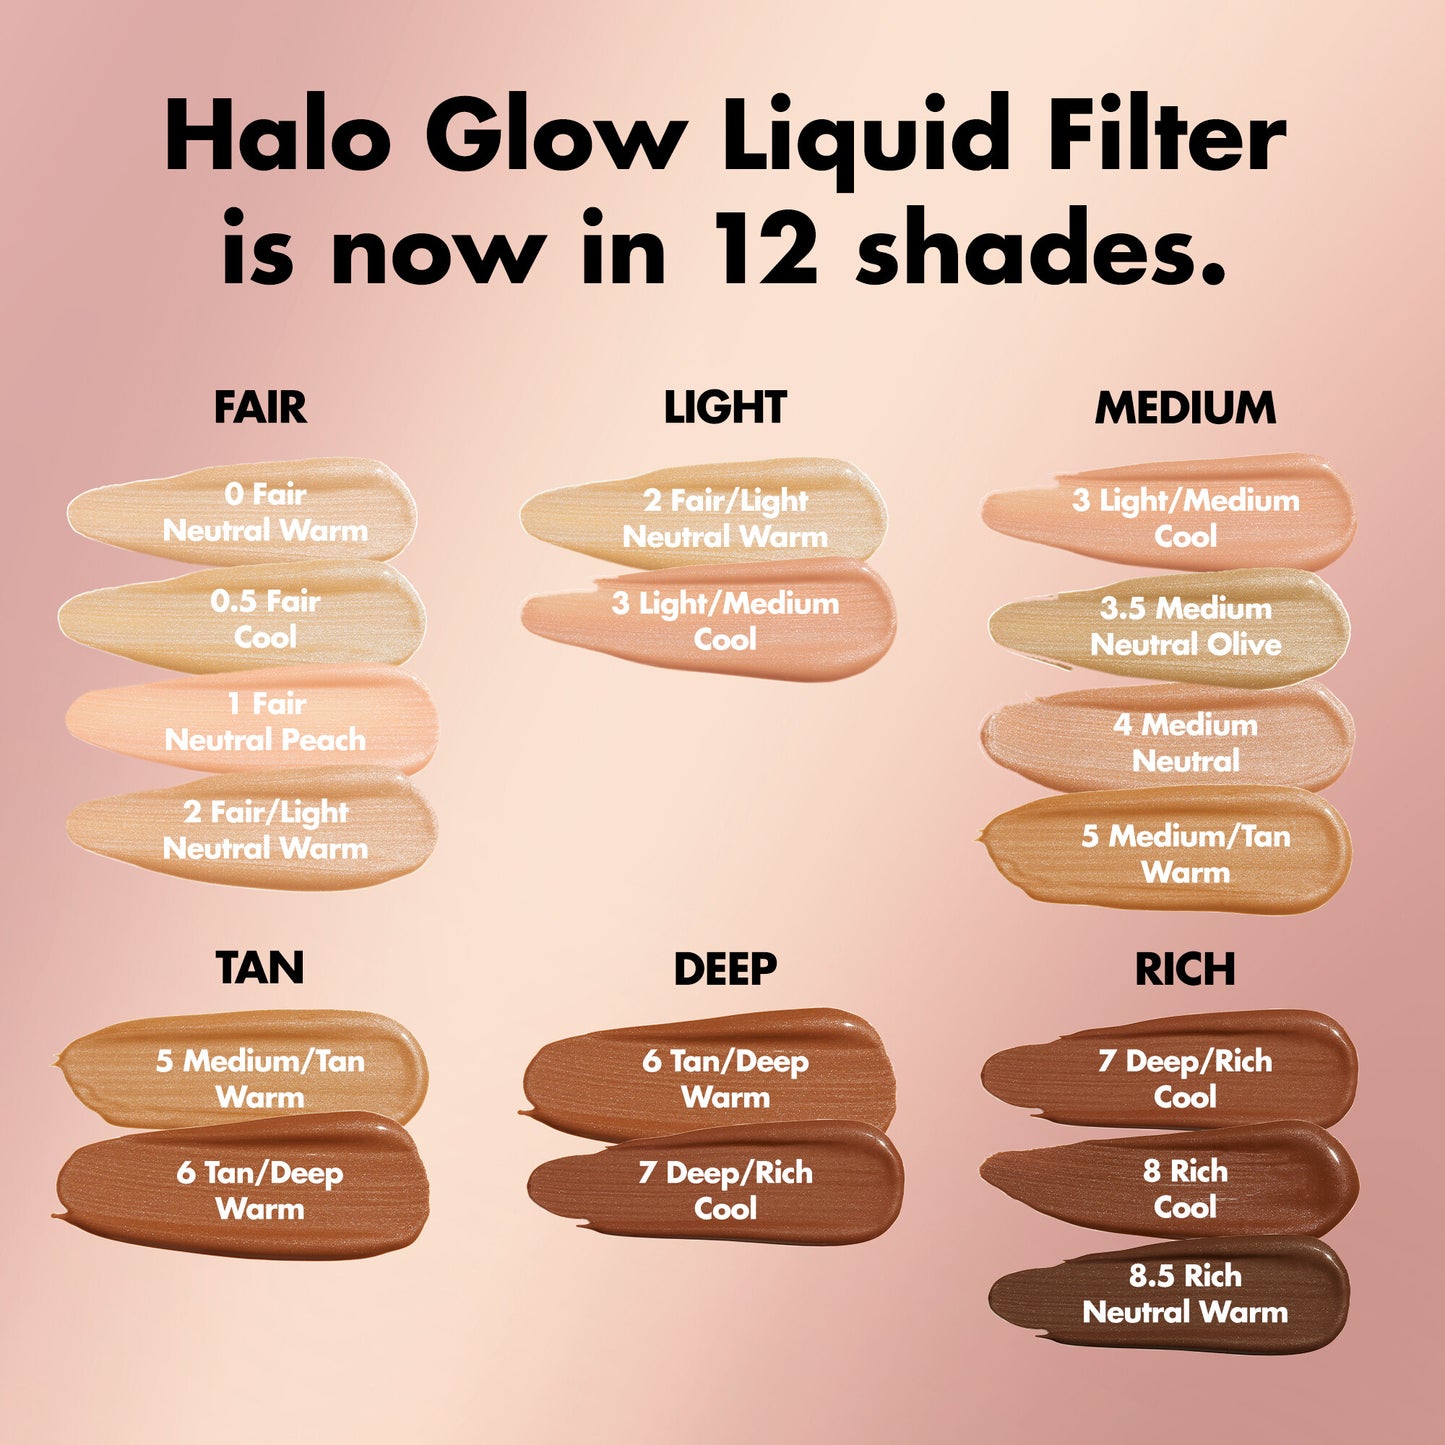 Halo Glow Liquid Filter 2 Fair/Light Neutral Warm x Elf